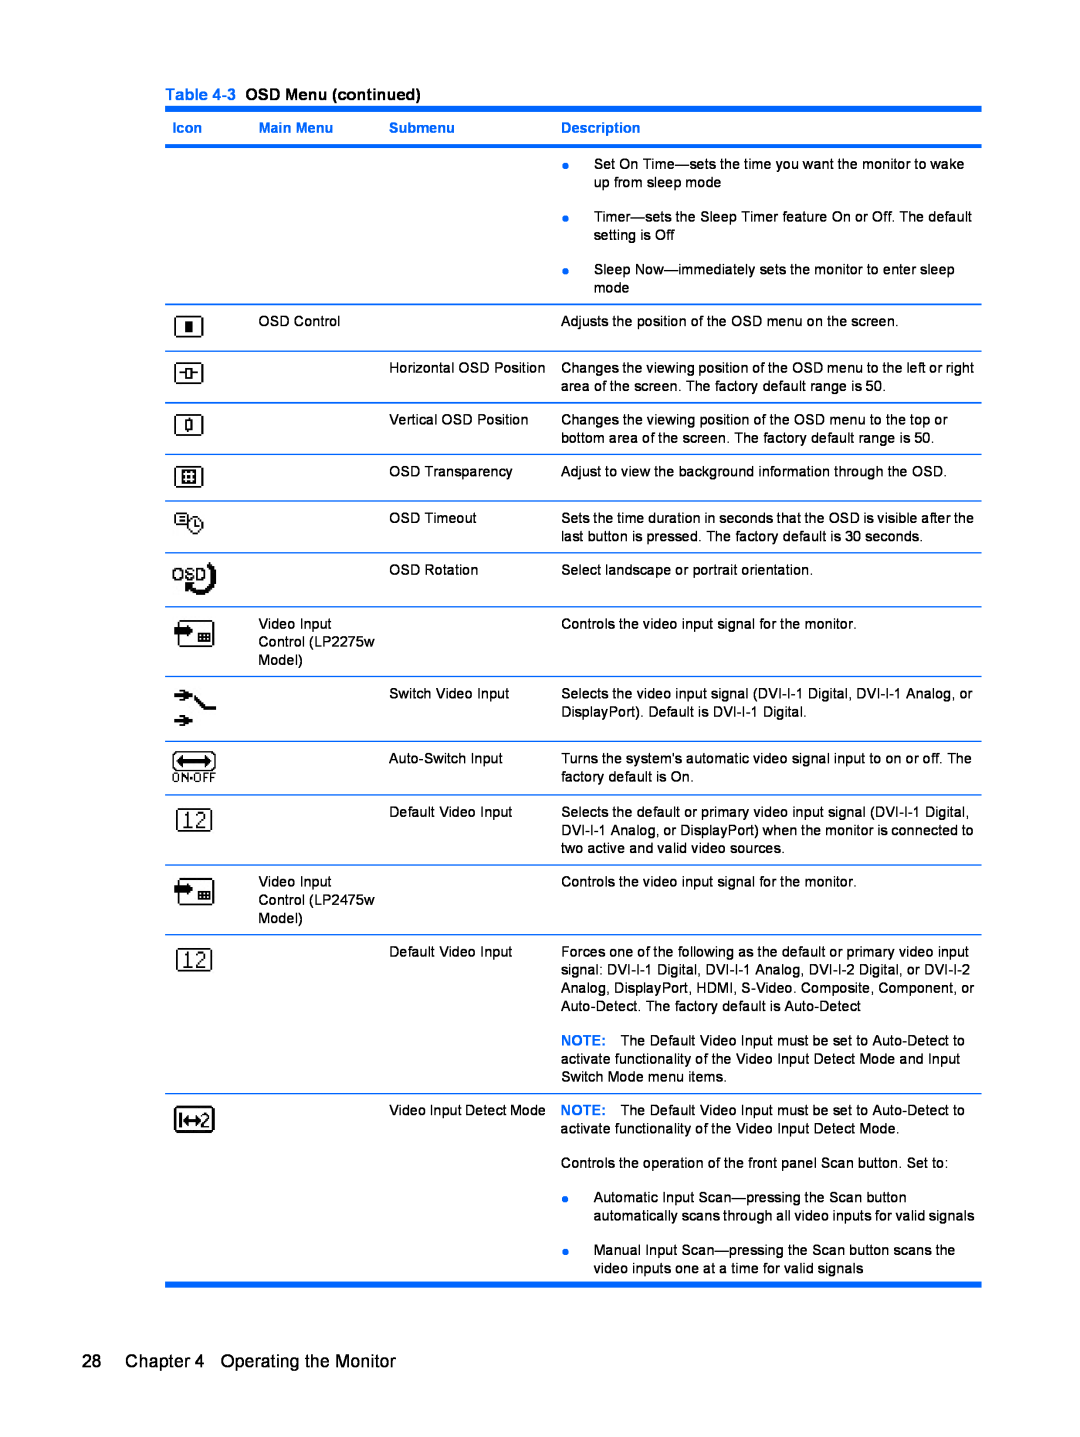 HP LP2275w manual 3 OSD Menu continued, Icon, Main Menu, Submenu, Description 